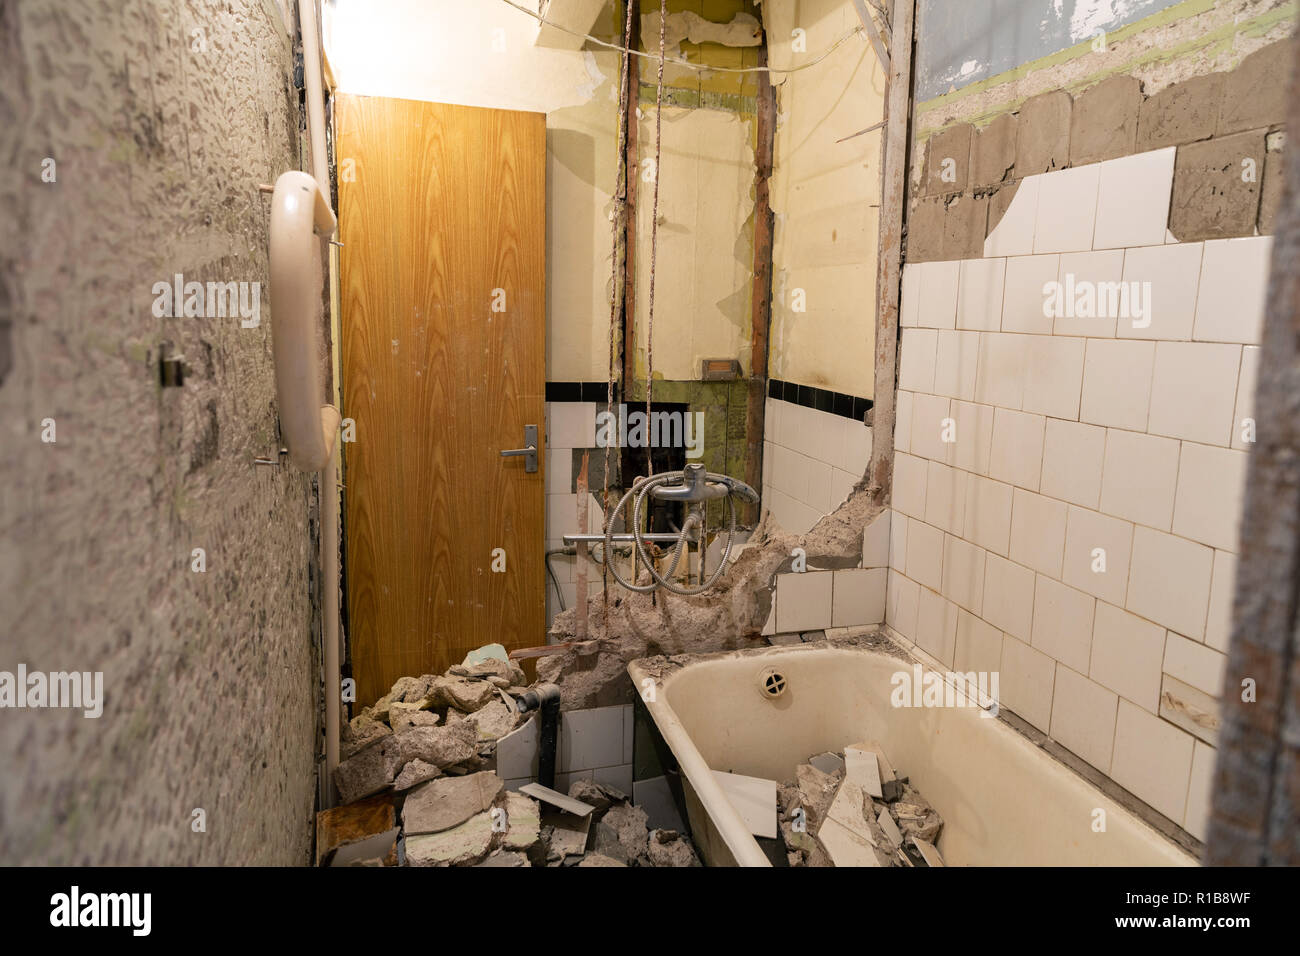 old bathroom demolition before complete renovation Stock Photo